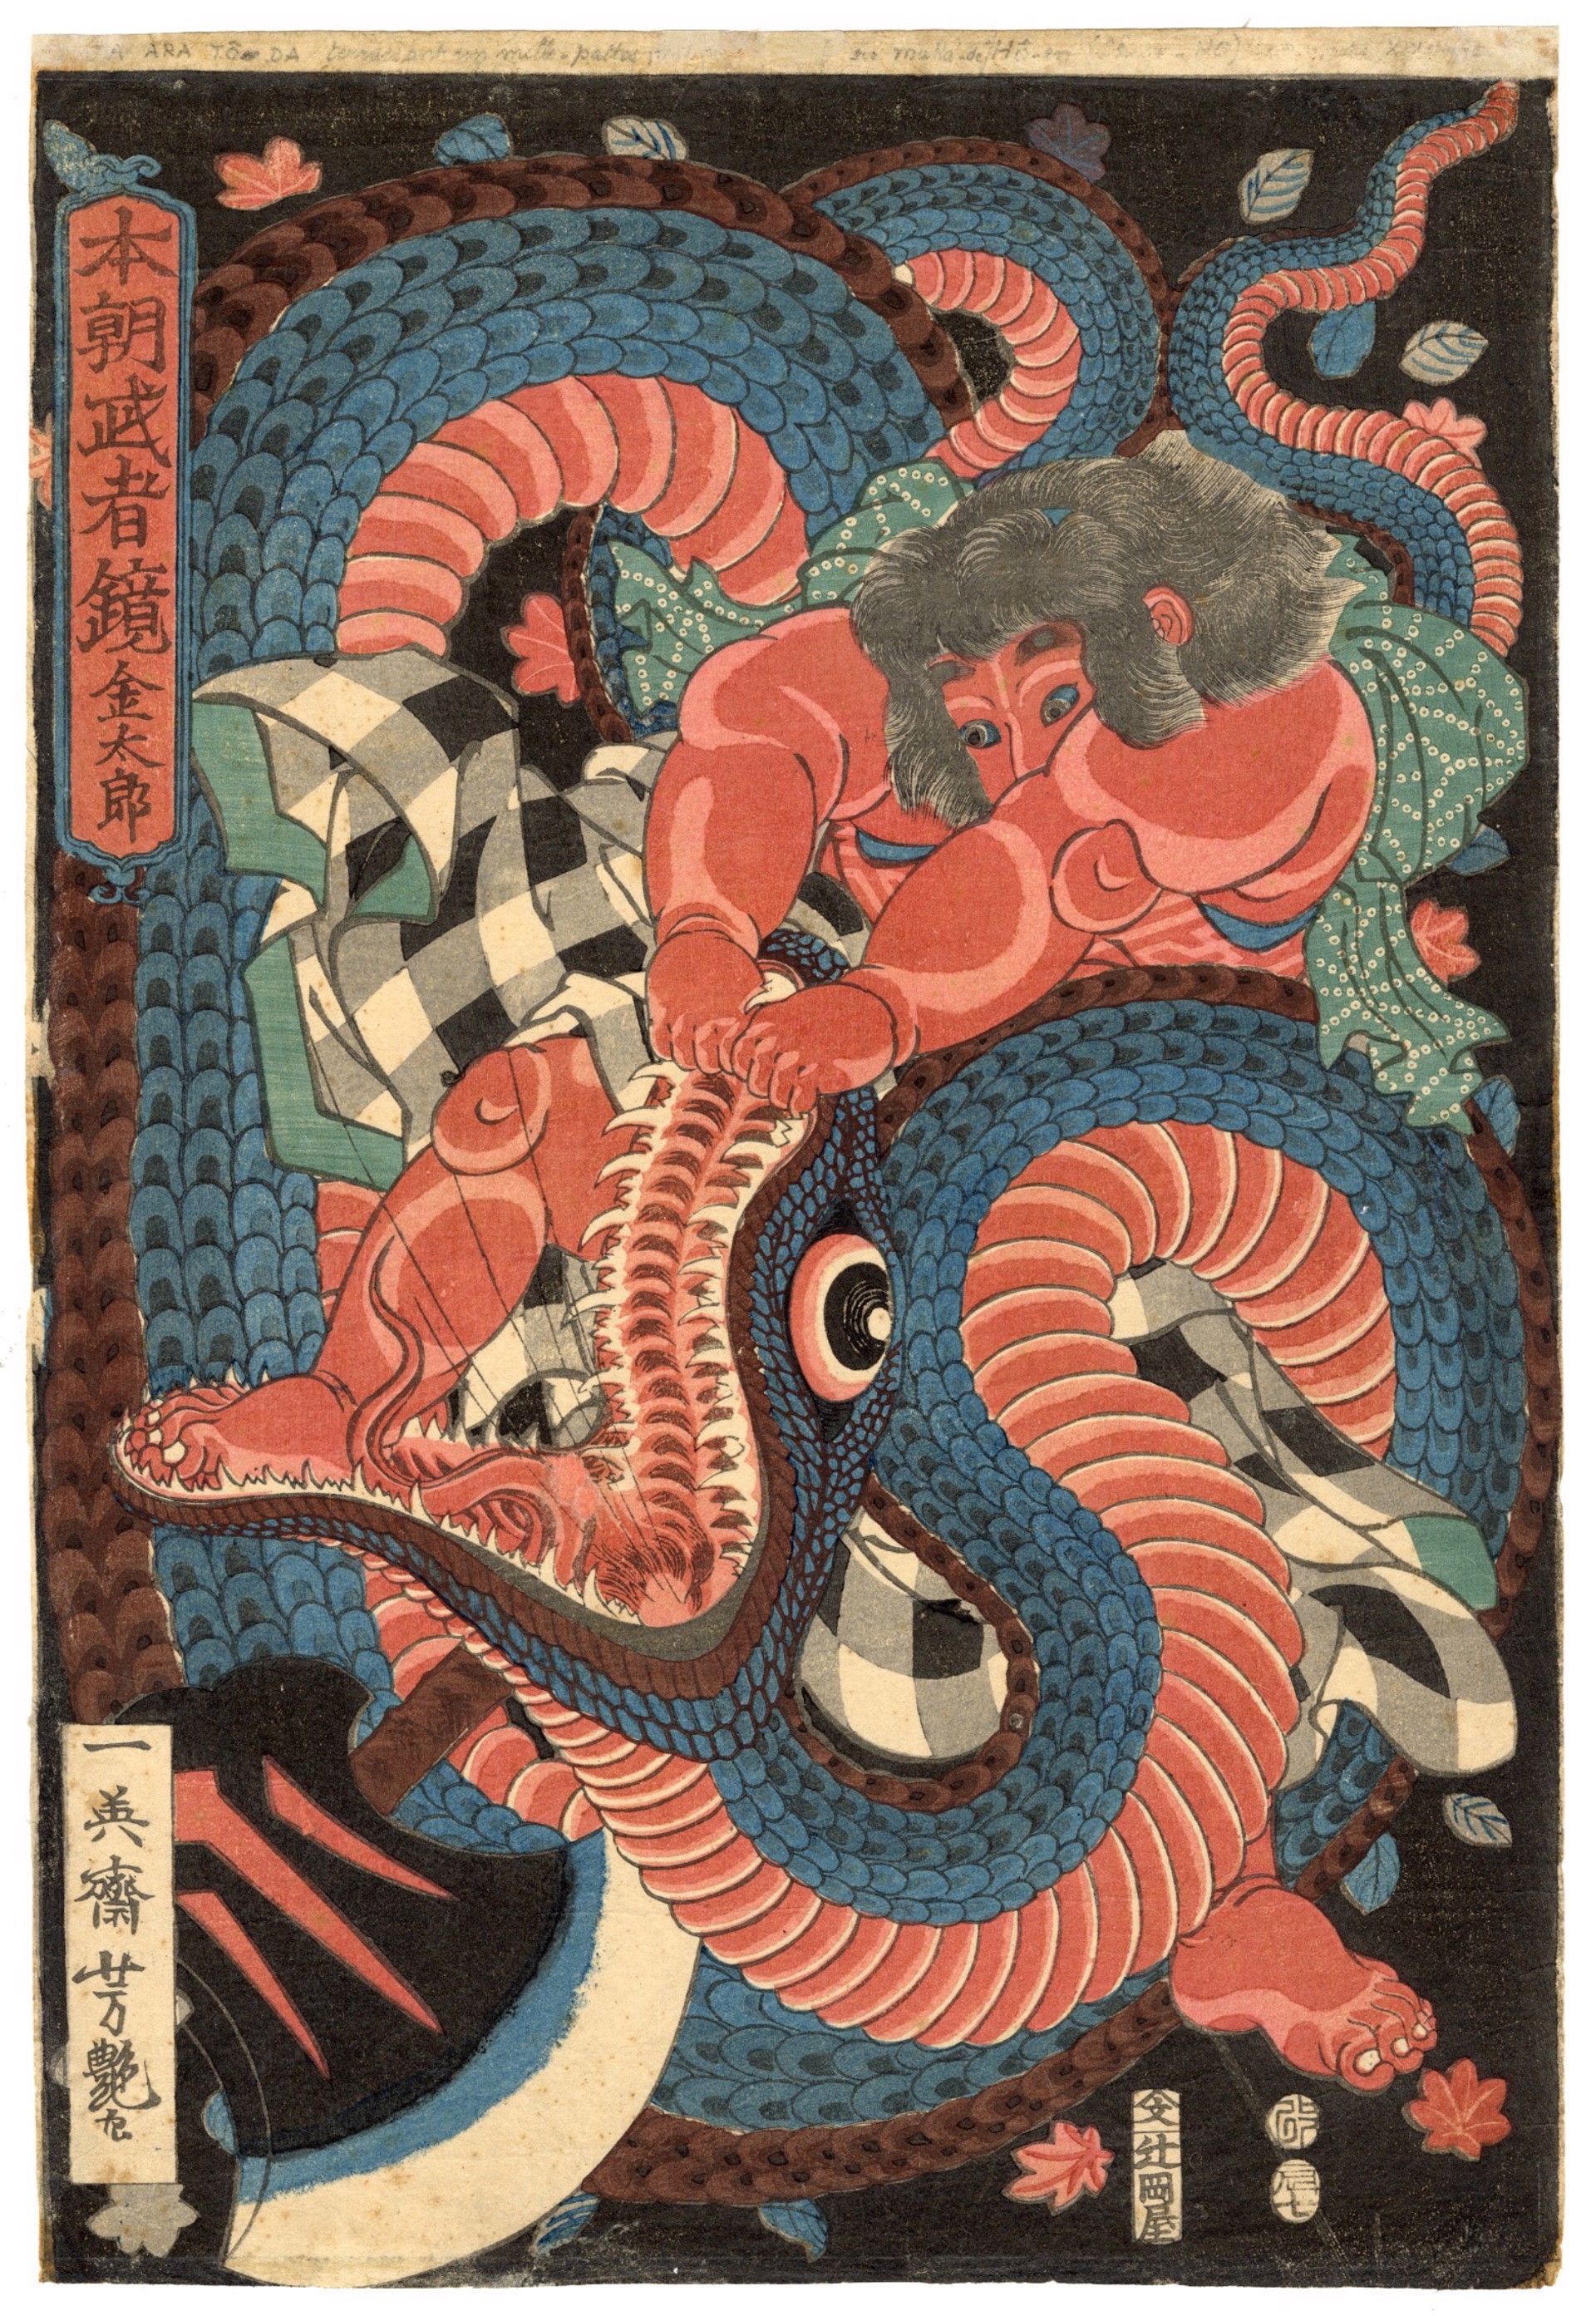 Kintoki Fighting a Great Snake by Yoshitsuya